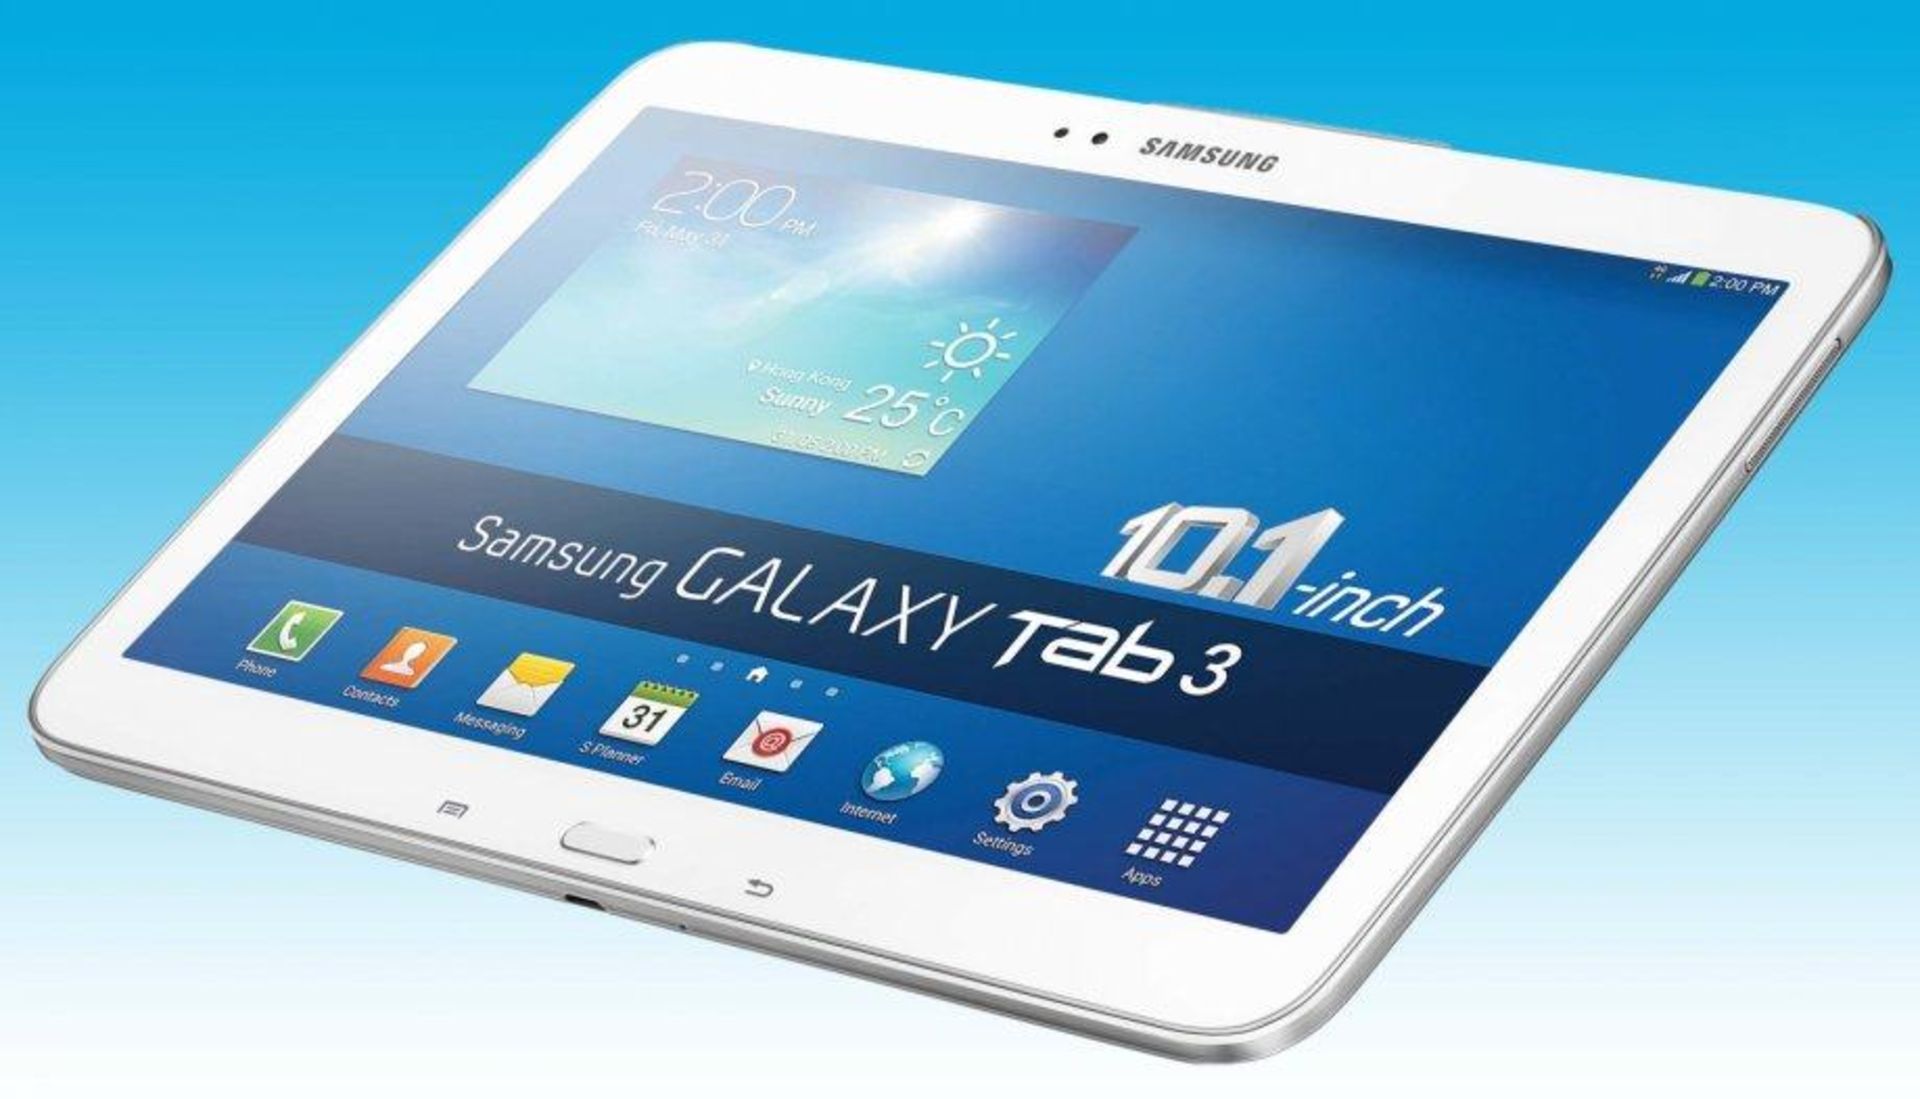 Samsung Galaxy Tab 3 GT-P5220 10.1” 16GB White WiFi & 4G